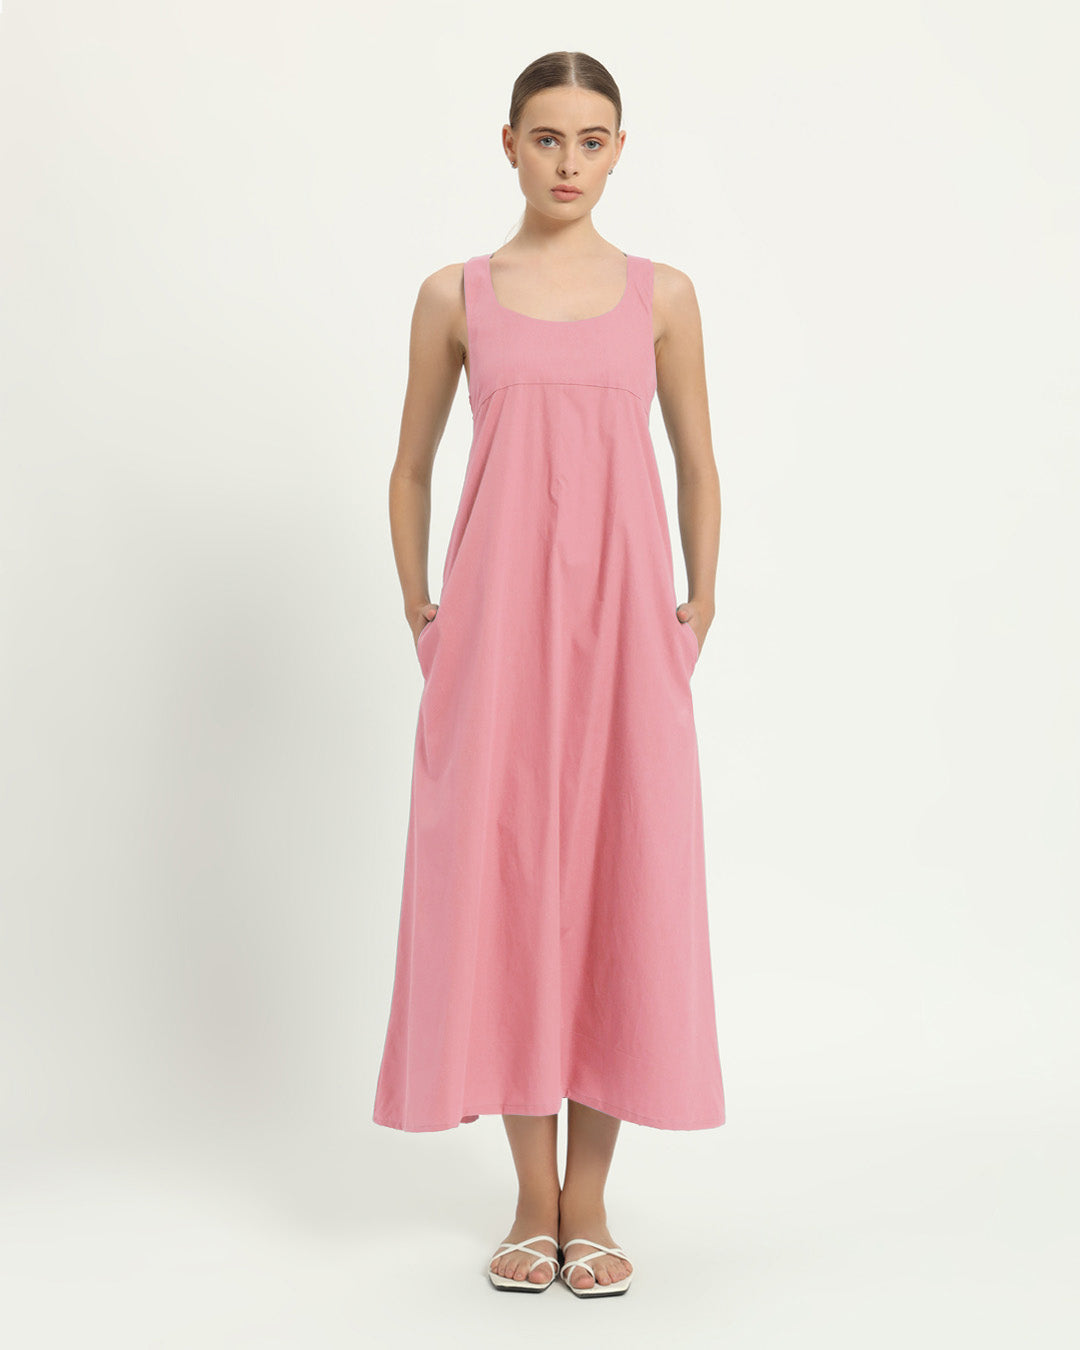 The Magdala Fondant Pink Cotton Dress